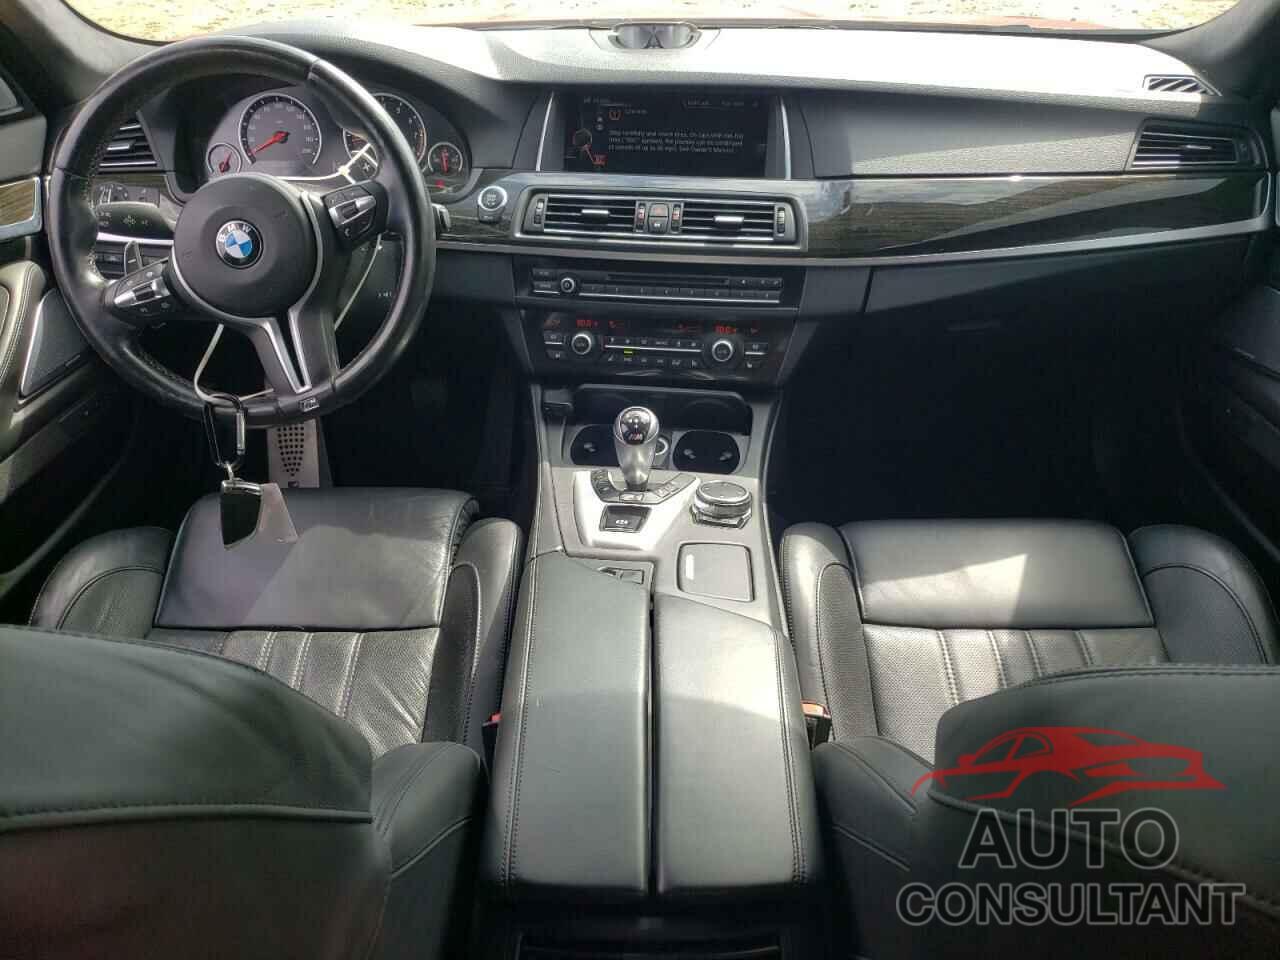 BMW M5 2015 - WBSFV9C54FD594724